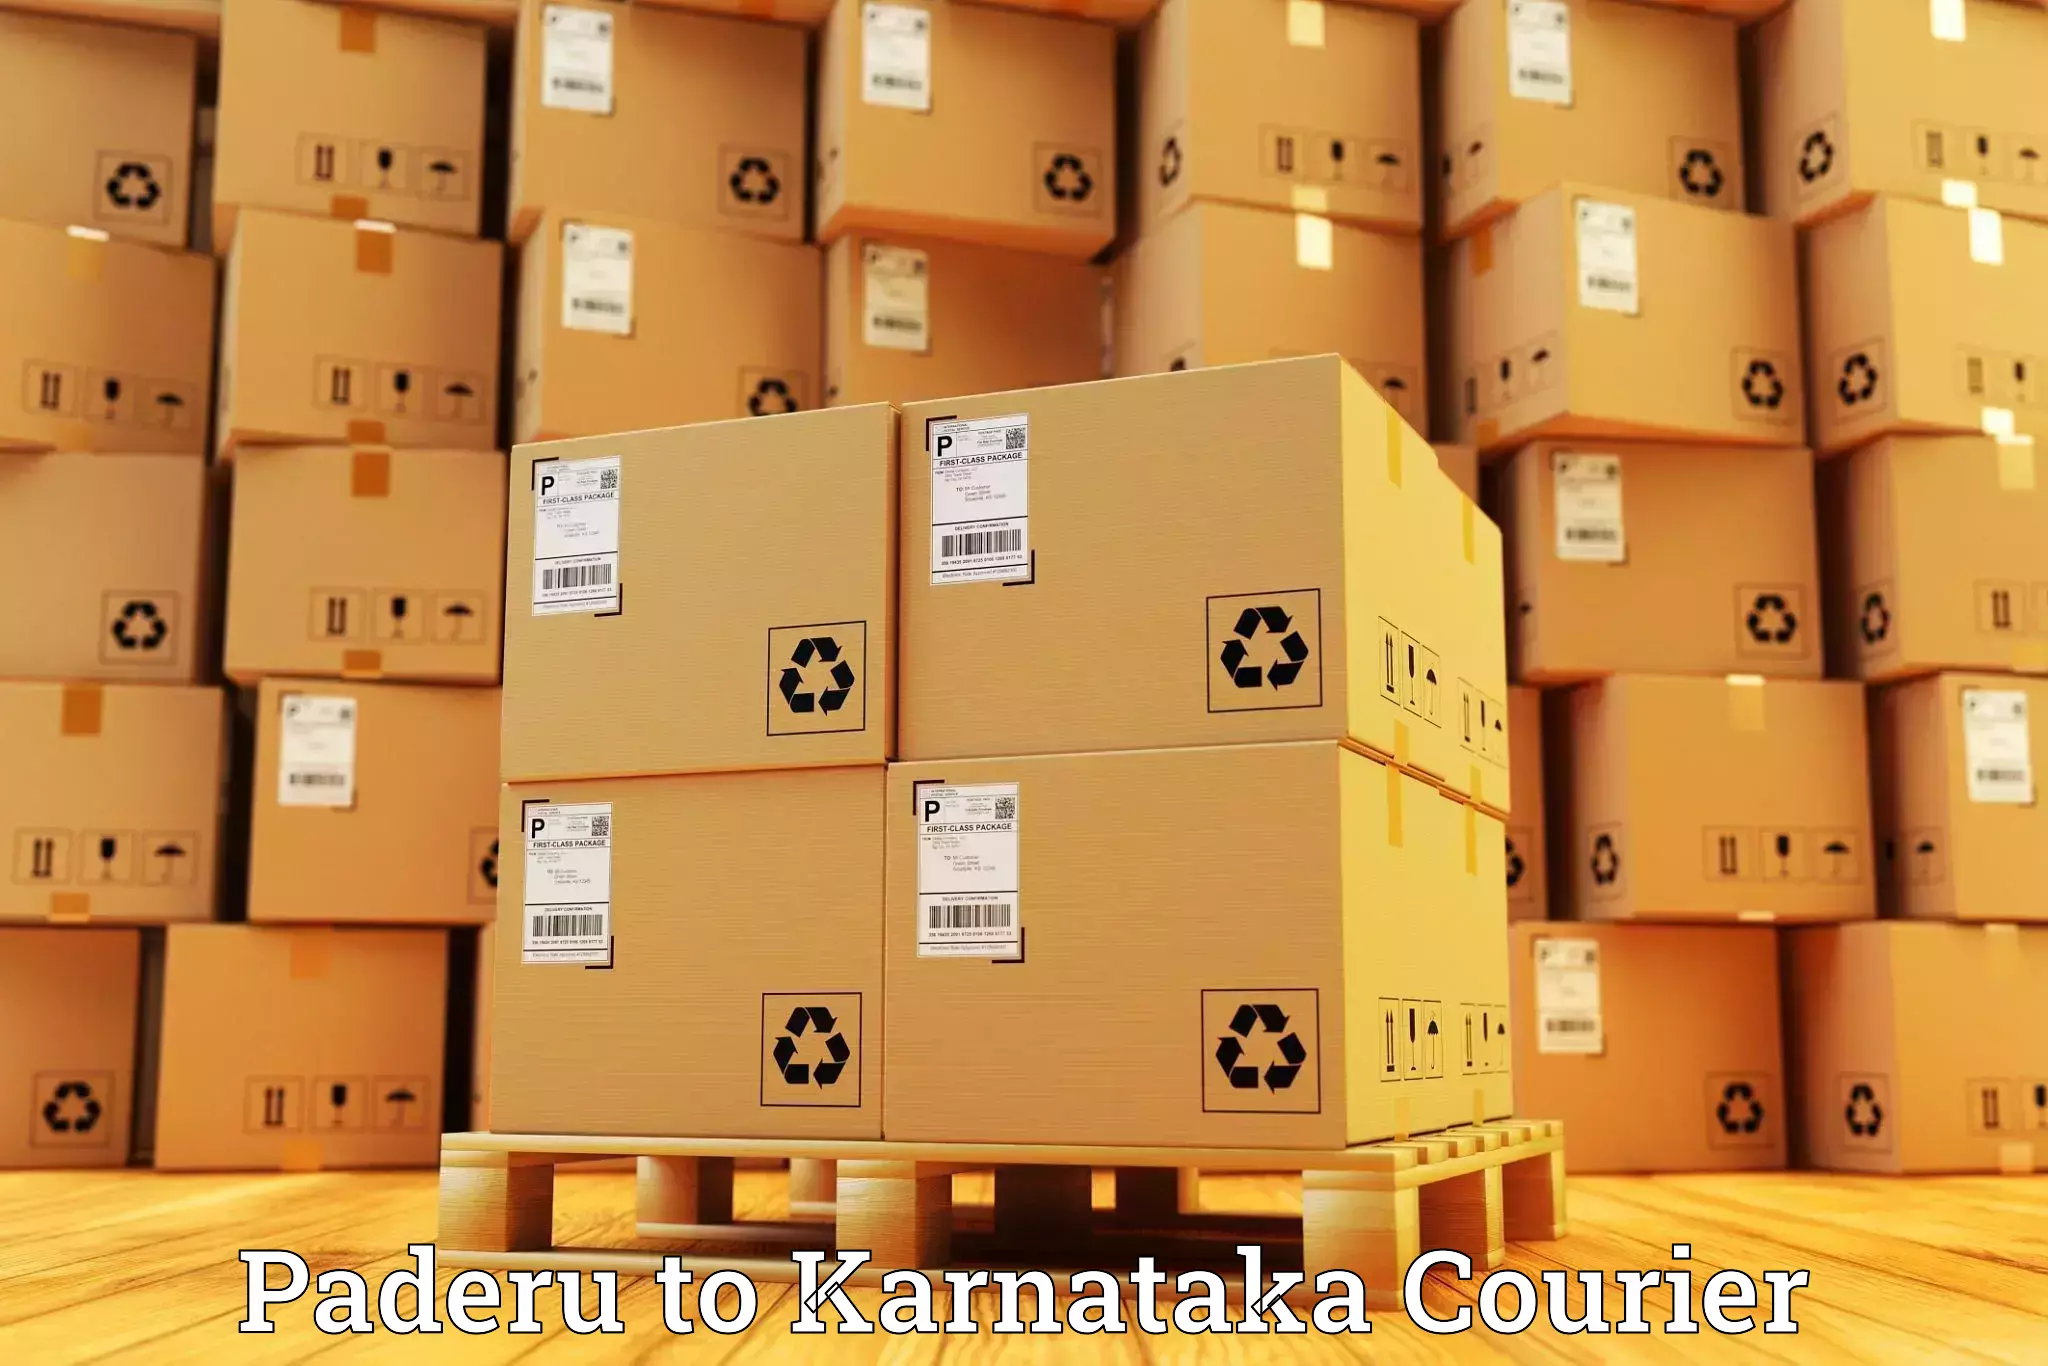 Courier service comparison in Paderu to Bangarapet